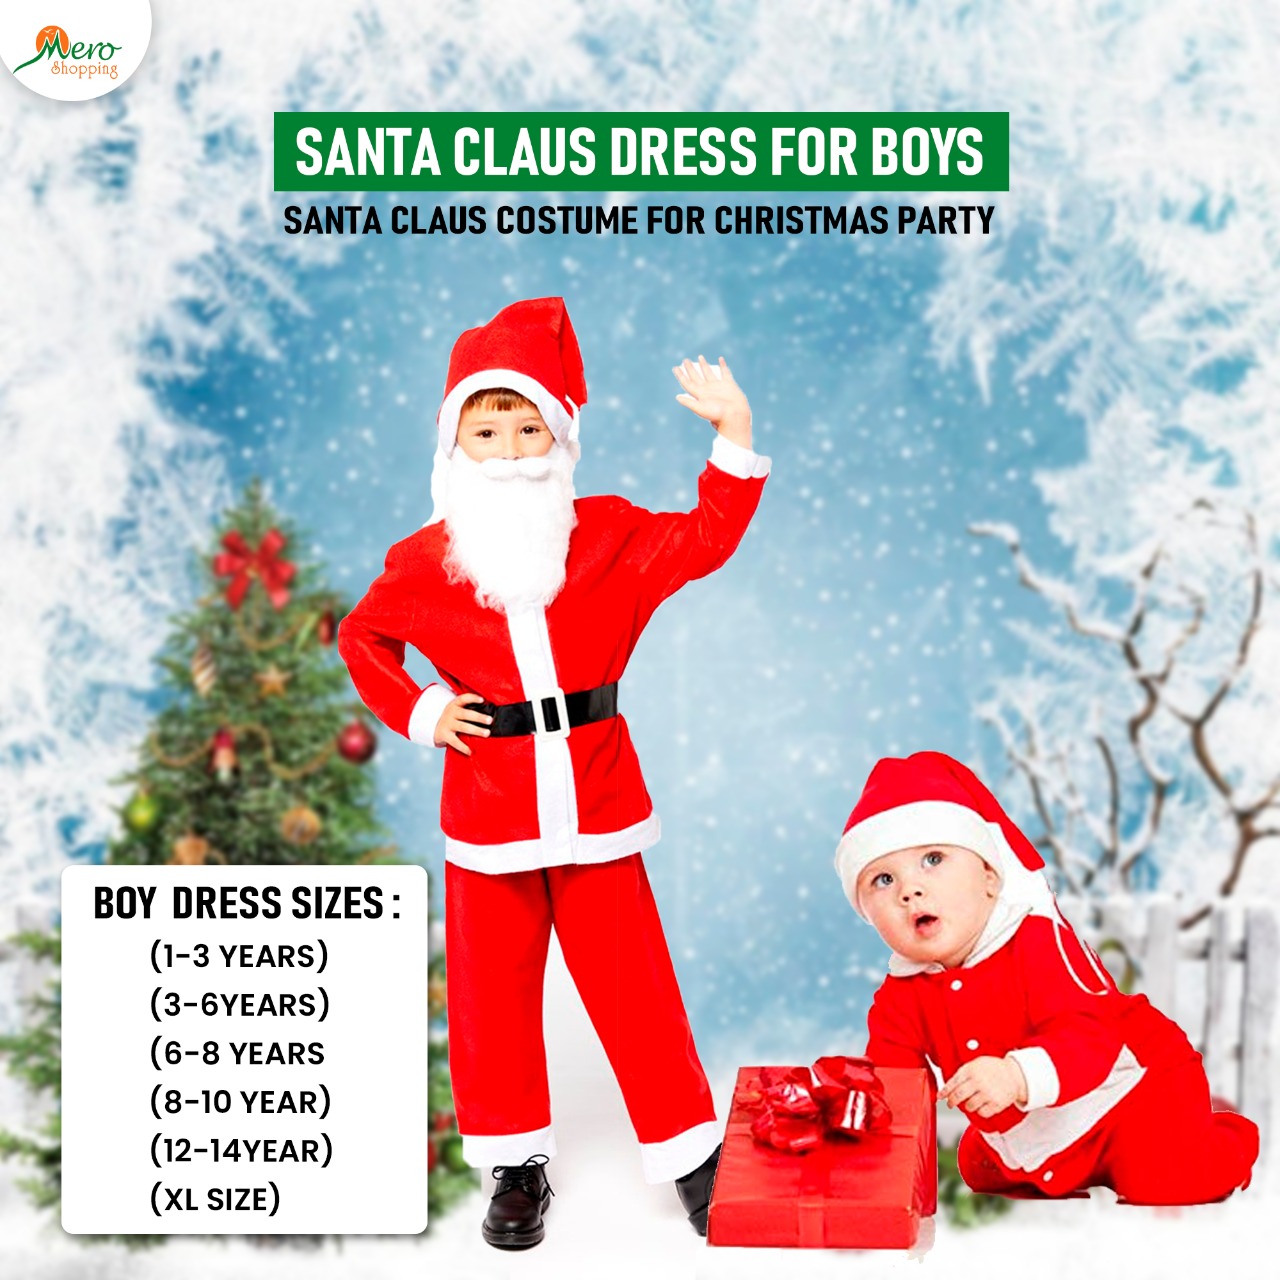 Santa Claus Dress for Boys